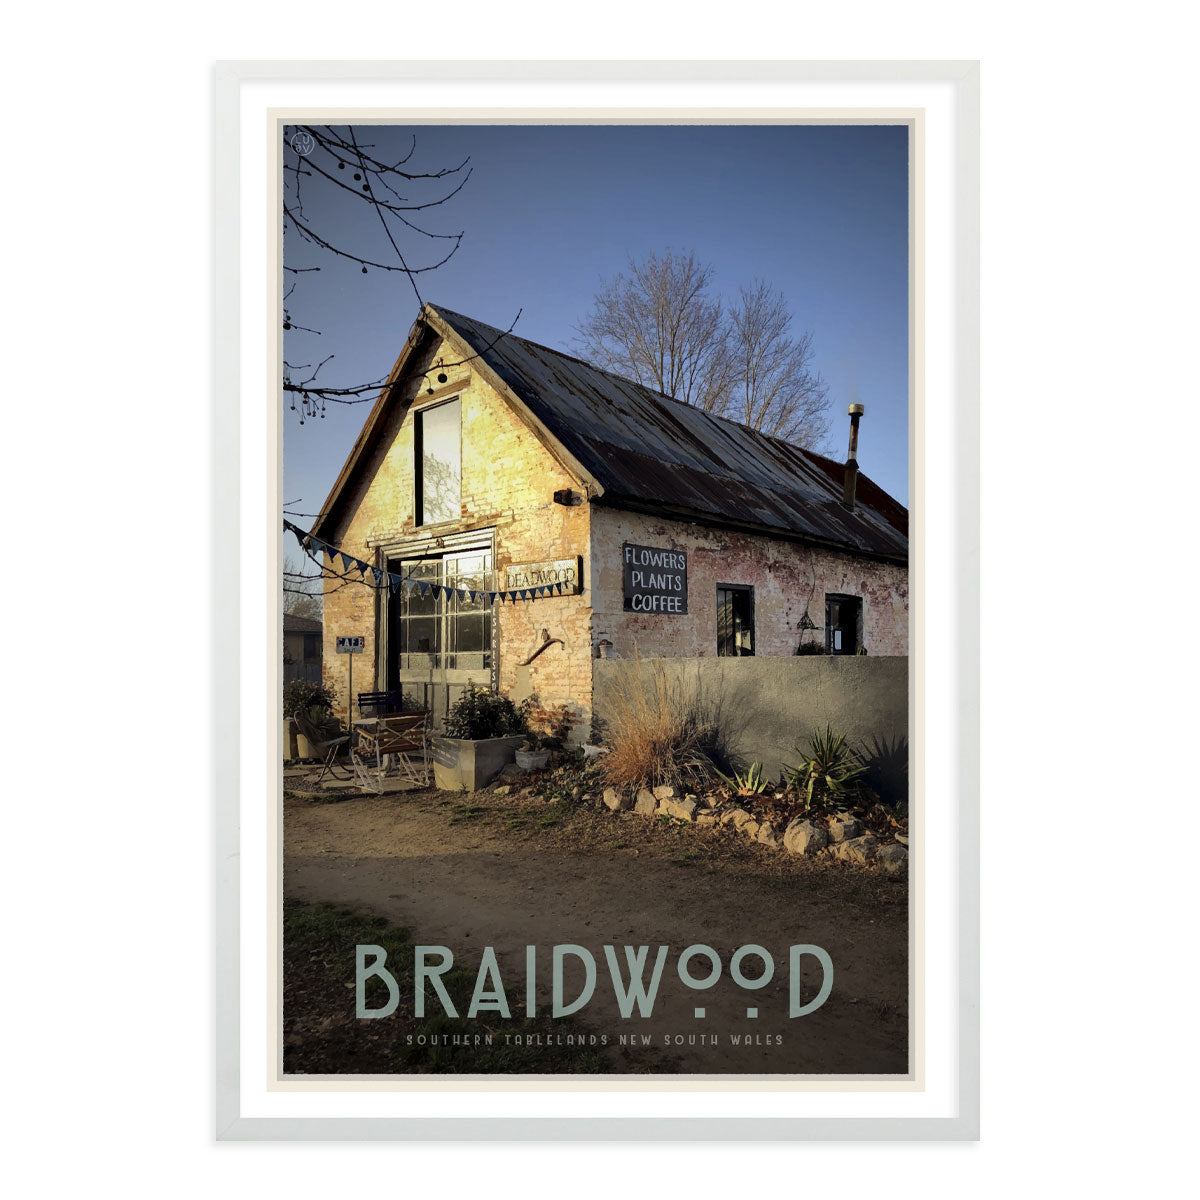 Braidwood cafe framed vintage travel style poster. Original design by Places We Luv